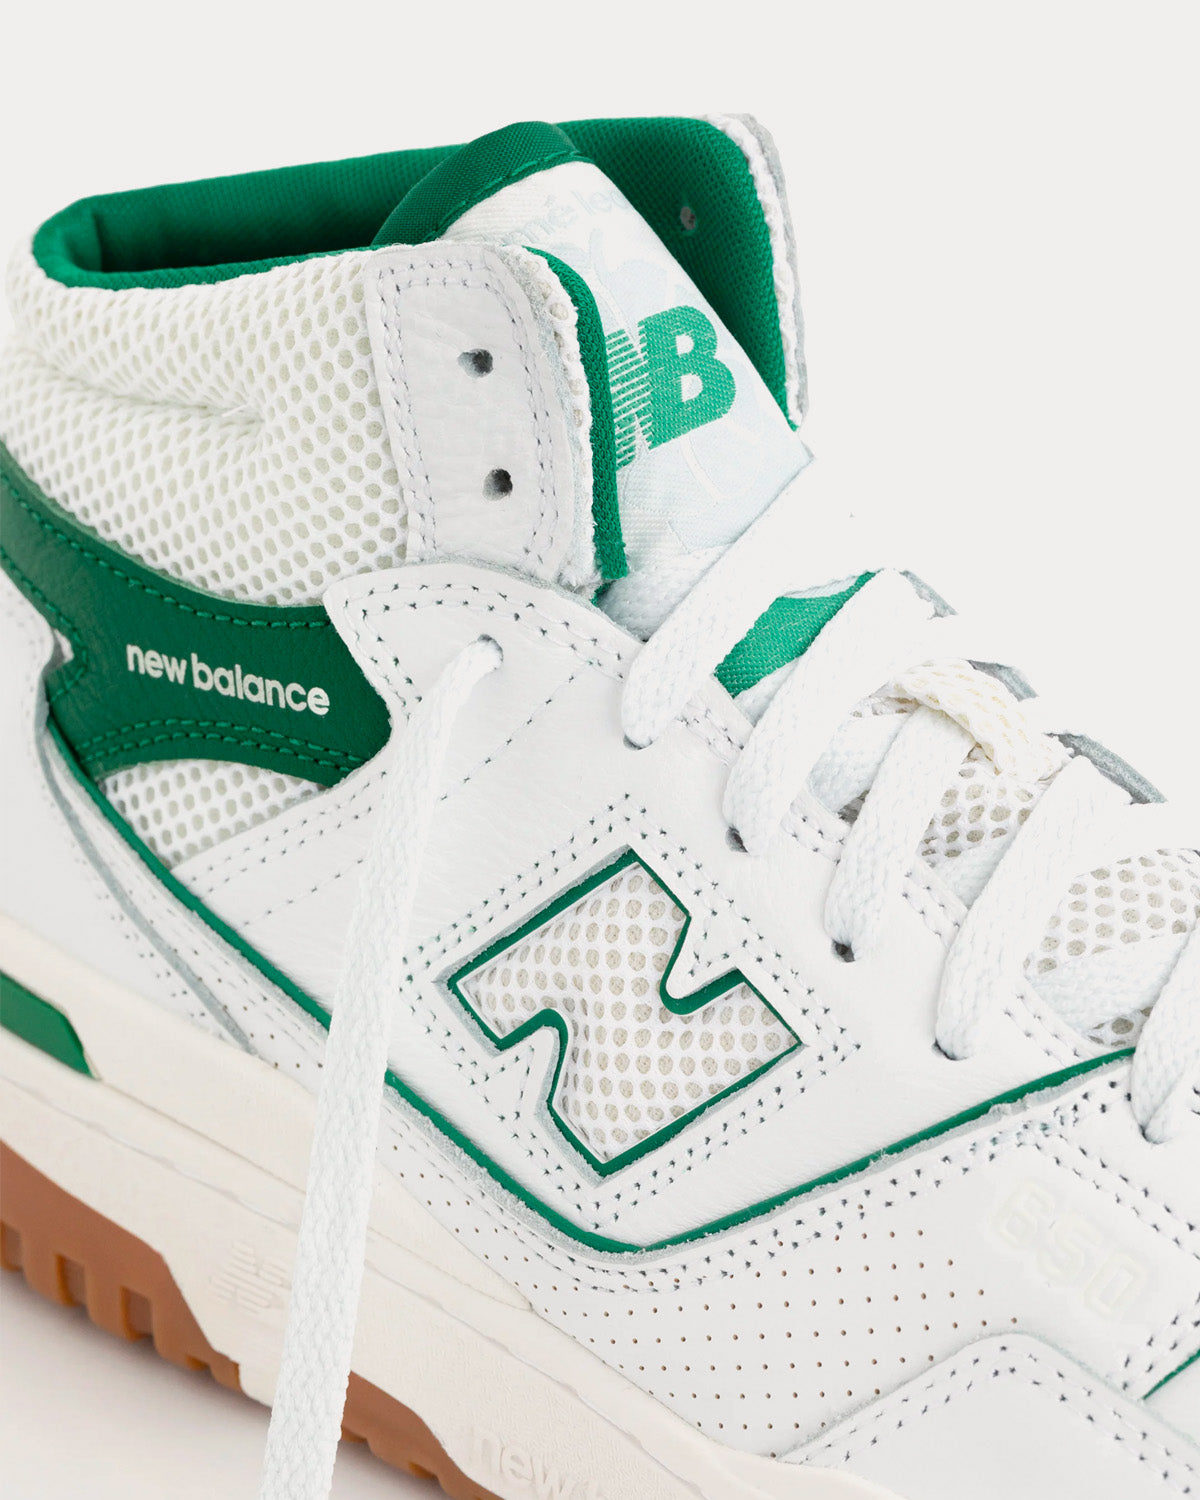 New Balance x Aime Leon Dore - 650r White / Green High Top Sneakers